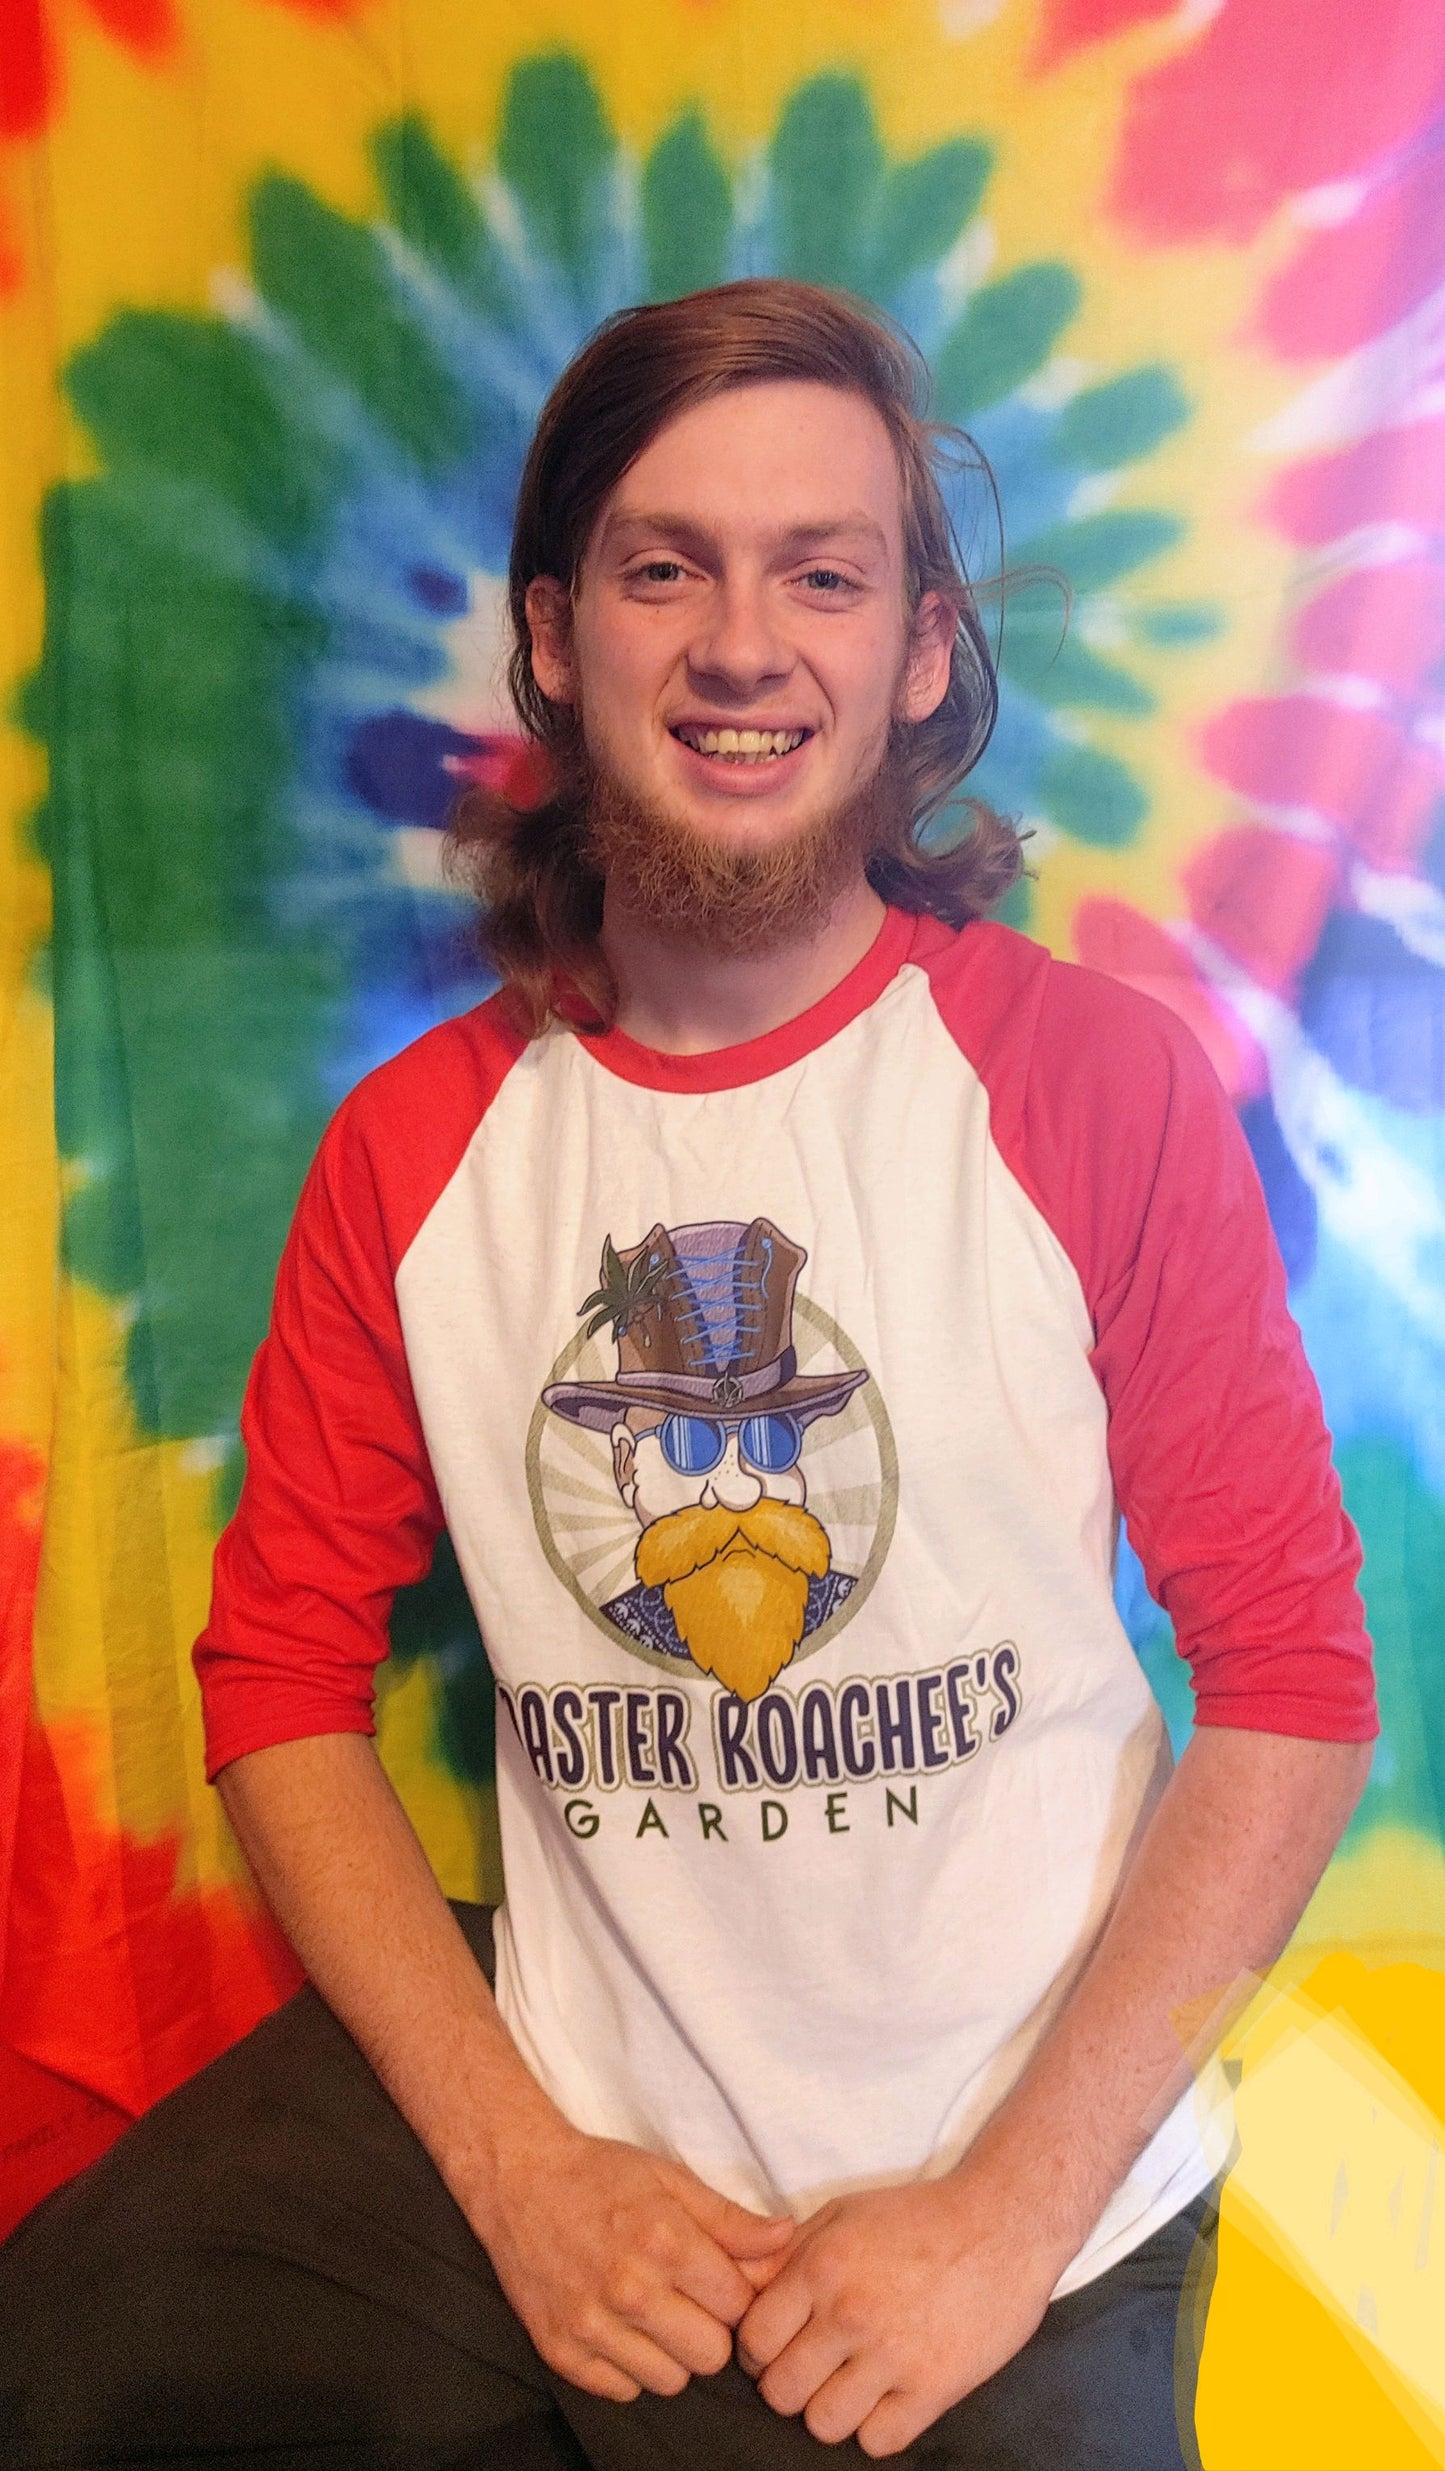 "Master Roachee's Garden" Raglan Shirts